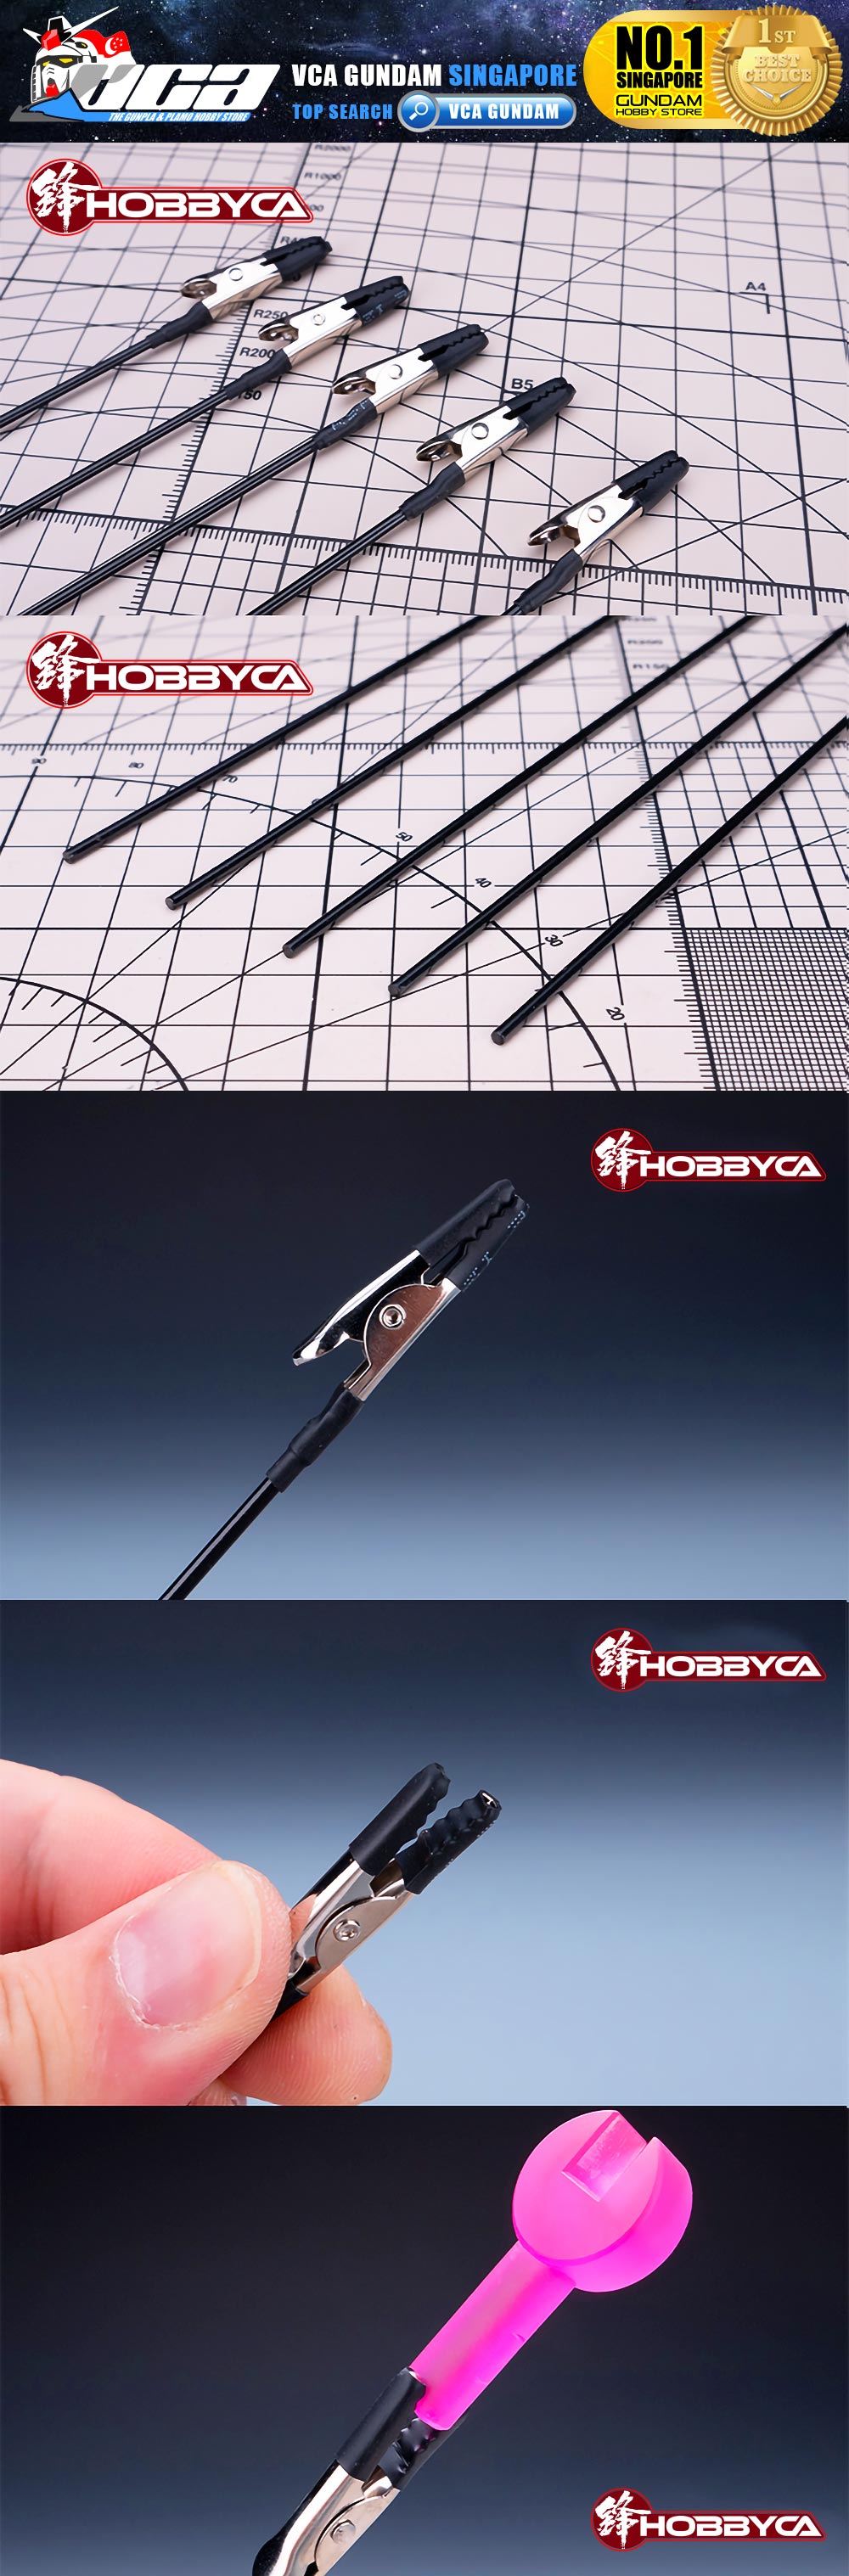 Hobbyca HCC-901 全金属画夹黑色版本适用于塑料模型爱好